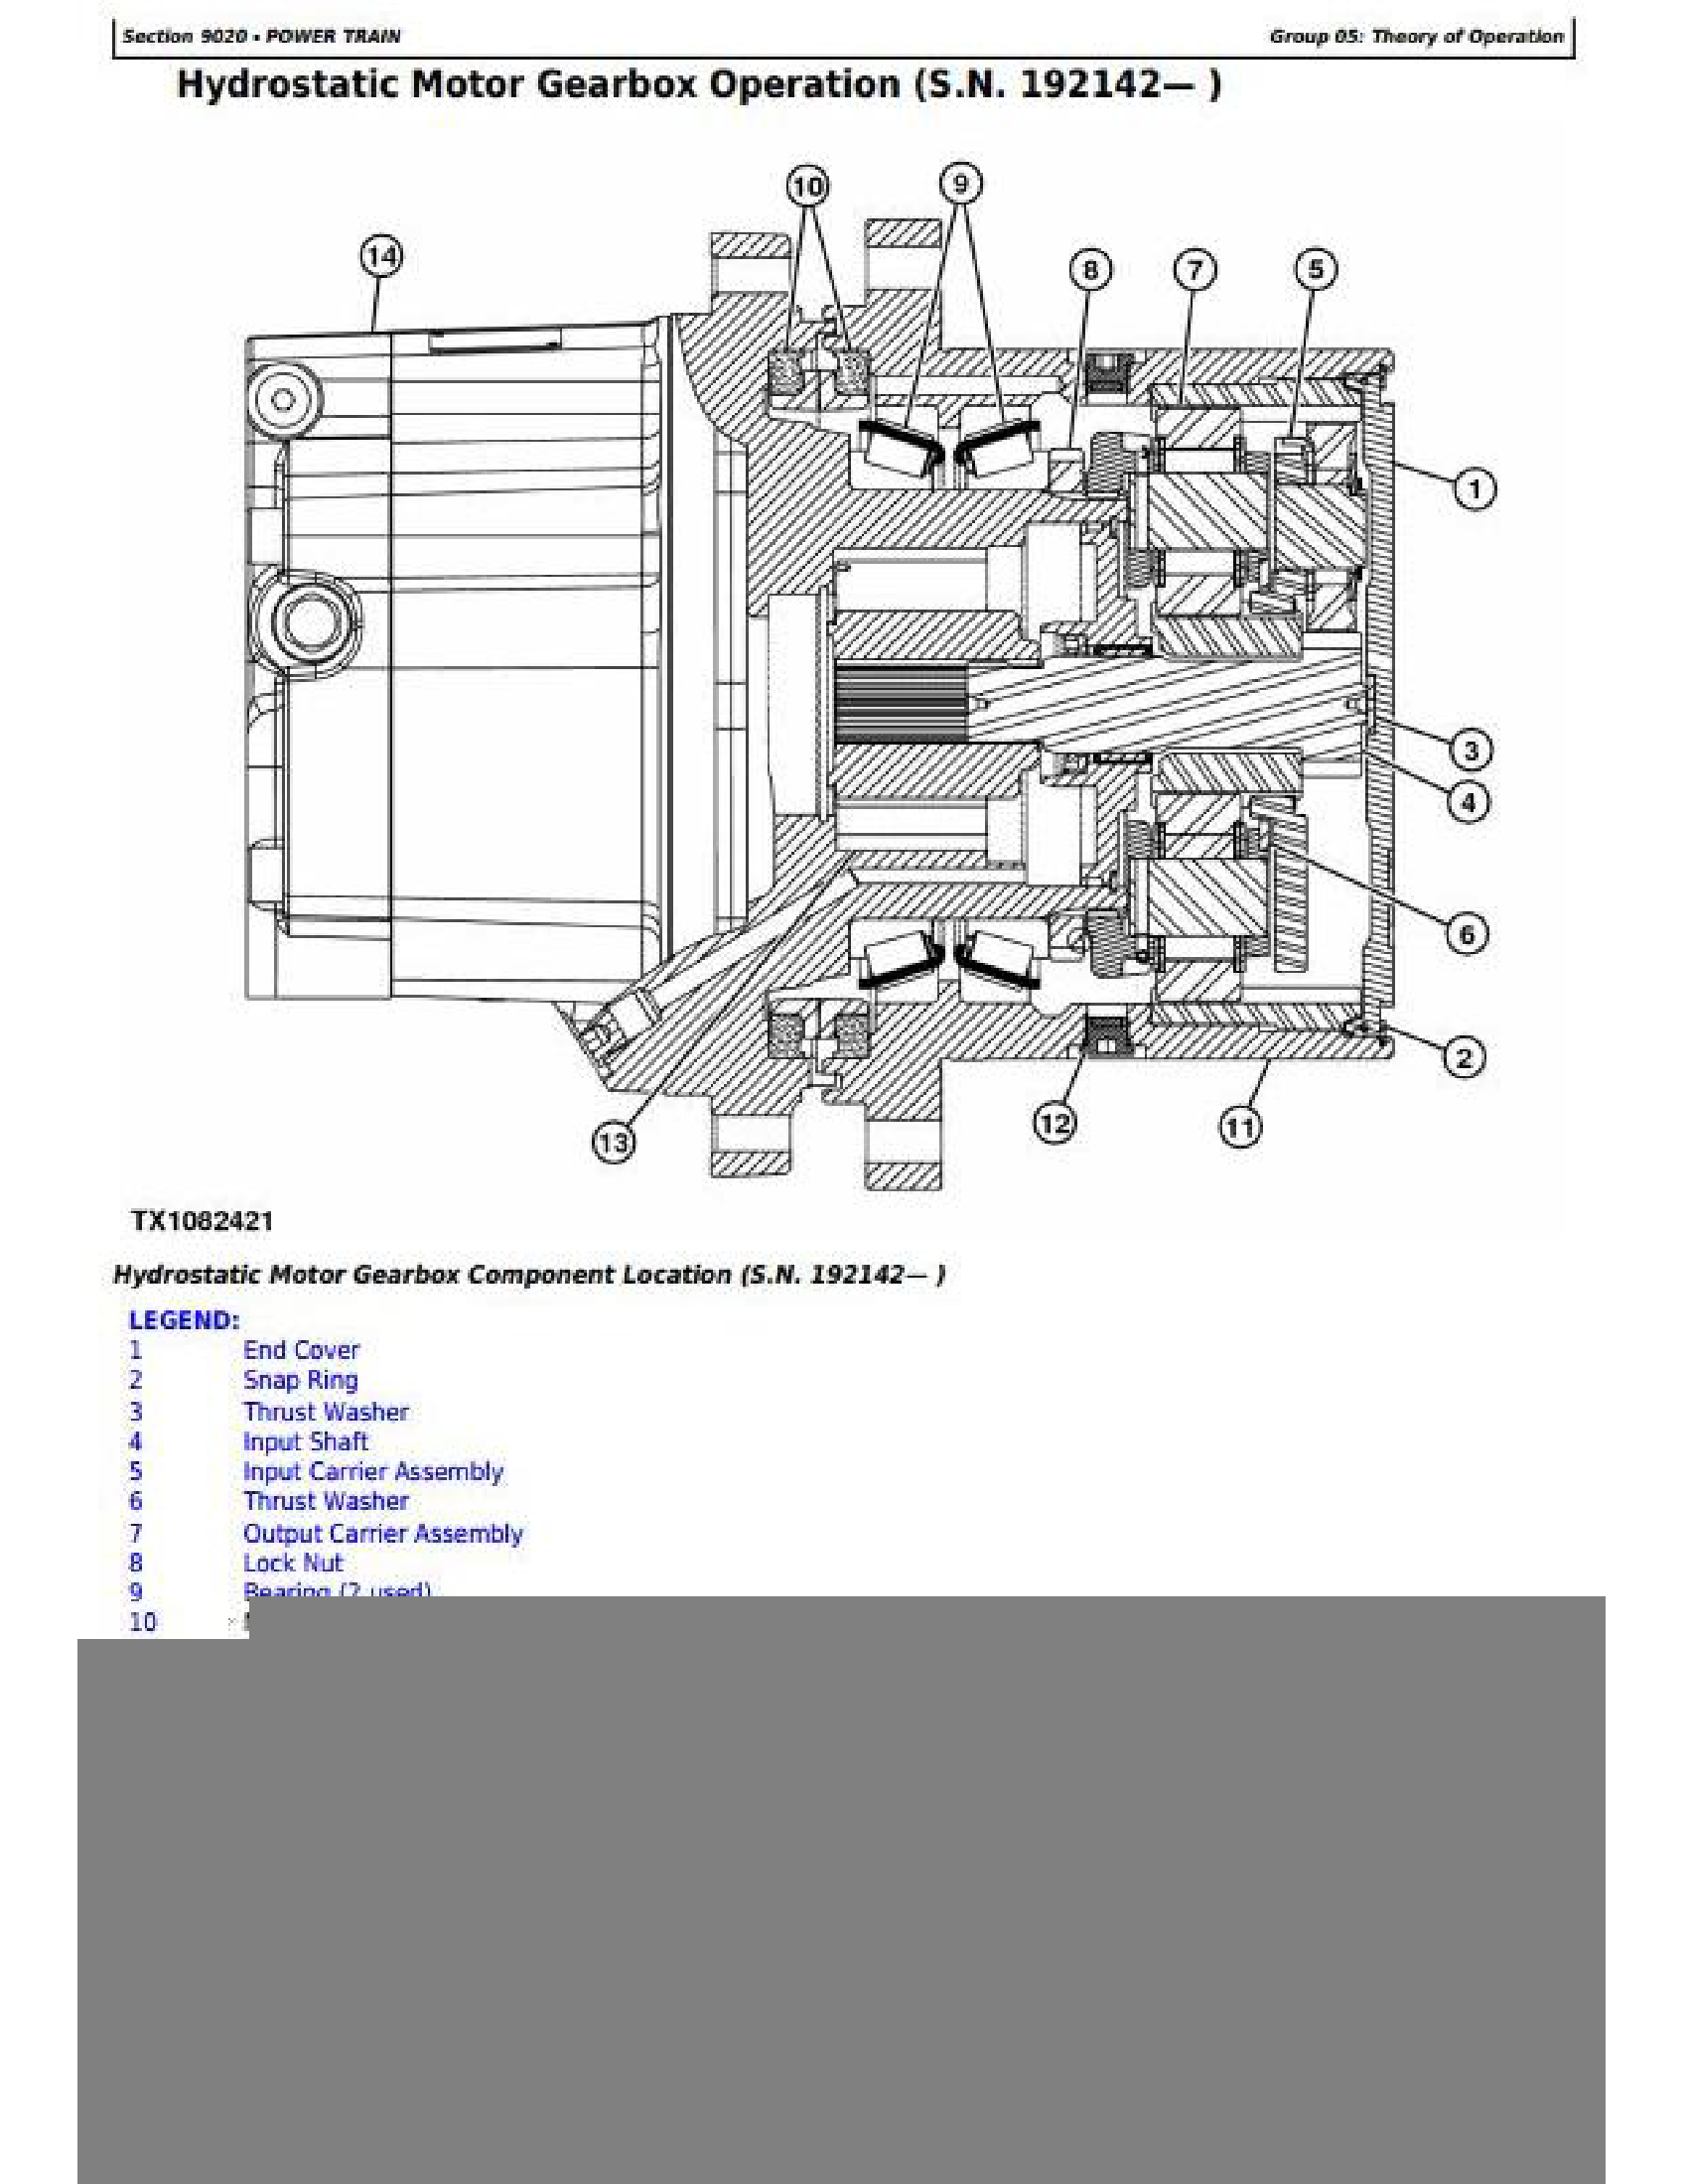 John Deere W260 manual pdf